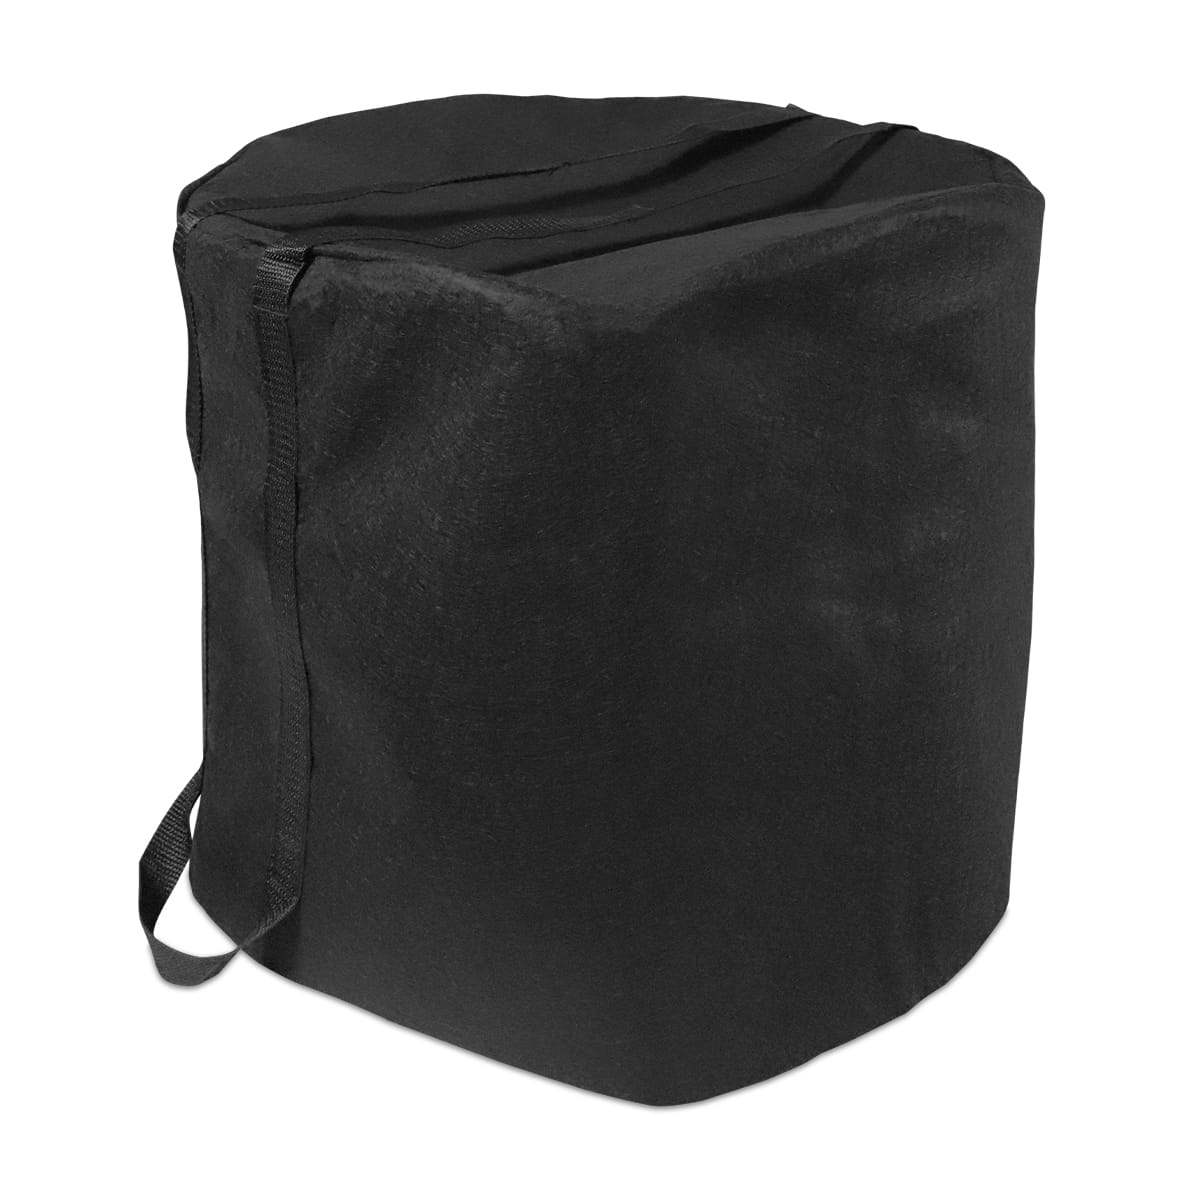 Phat Sack Black 15 Gallon Fabric Pot Support Straps